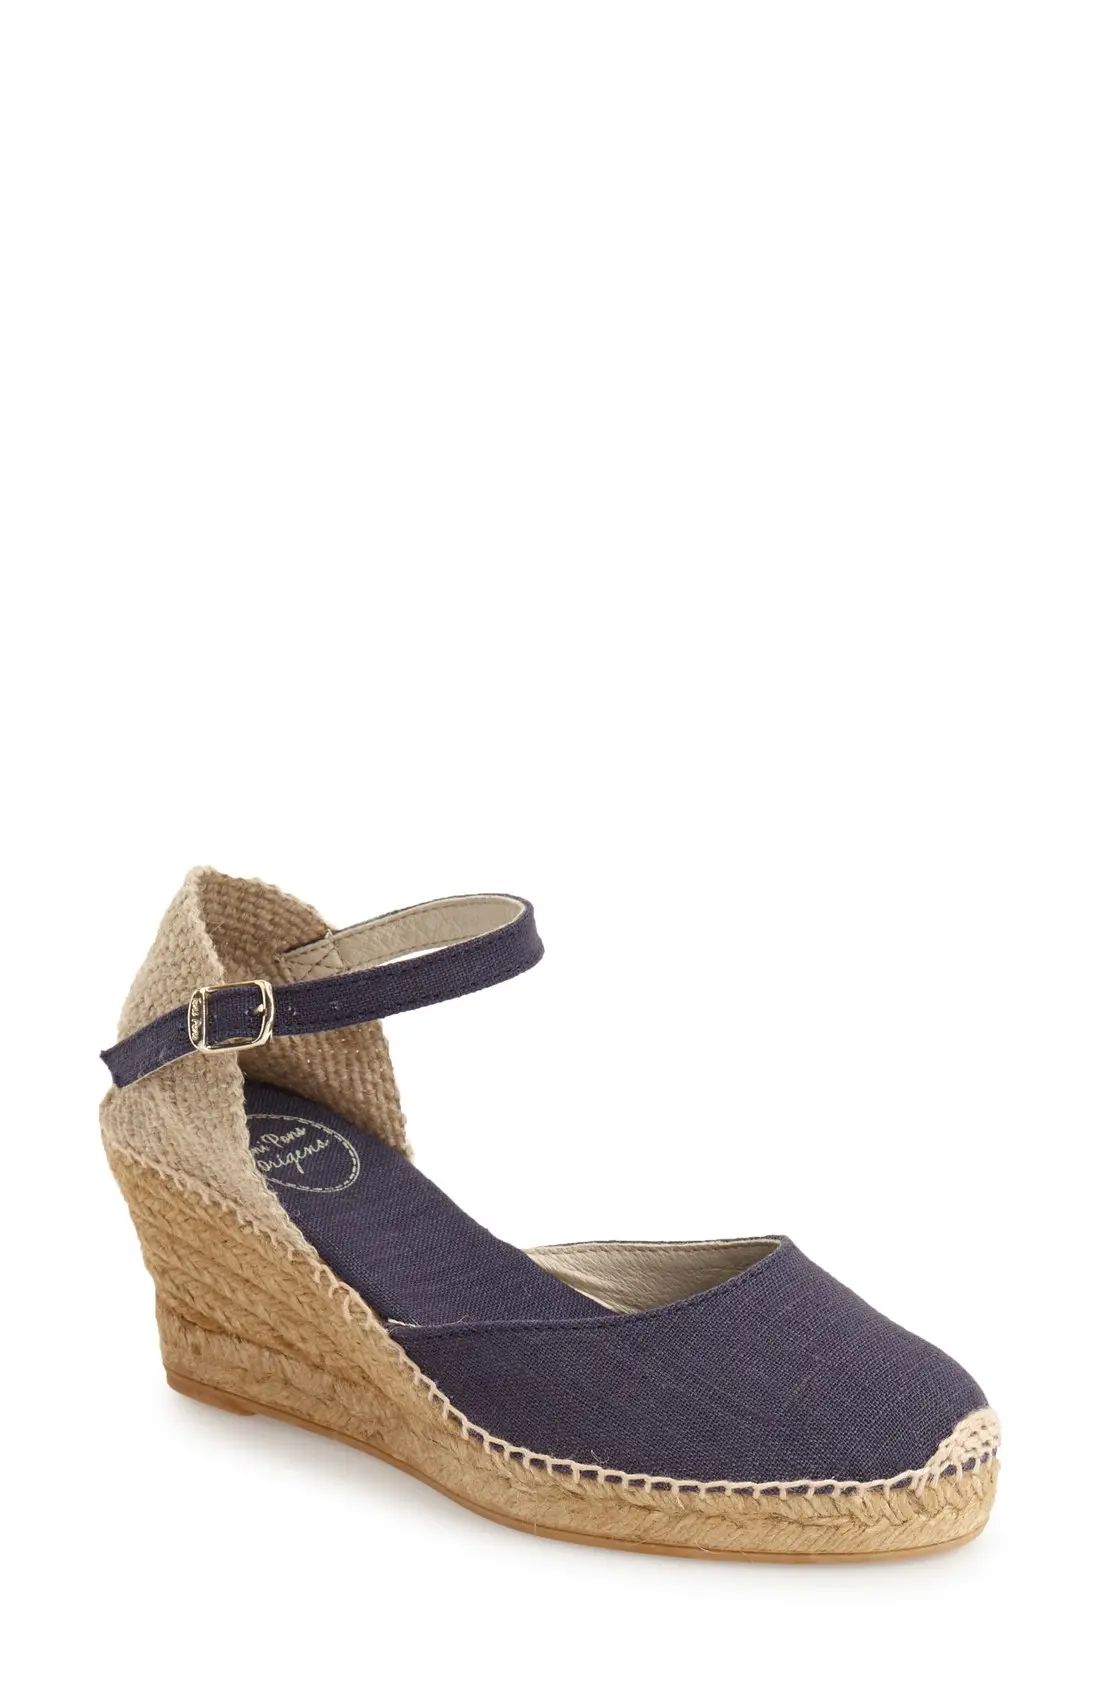 Women's Toni Pons 'Caldes' Linen Wedge Sandal, Size 11US - Blue | Nordstrom